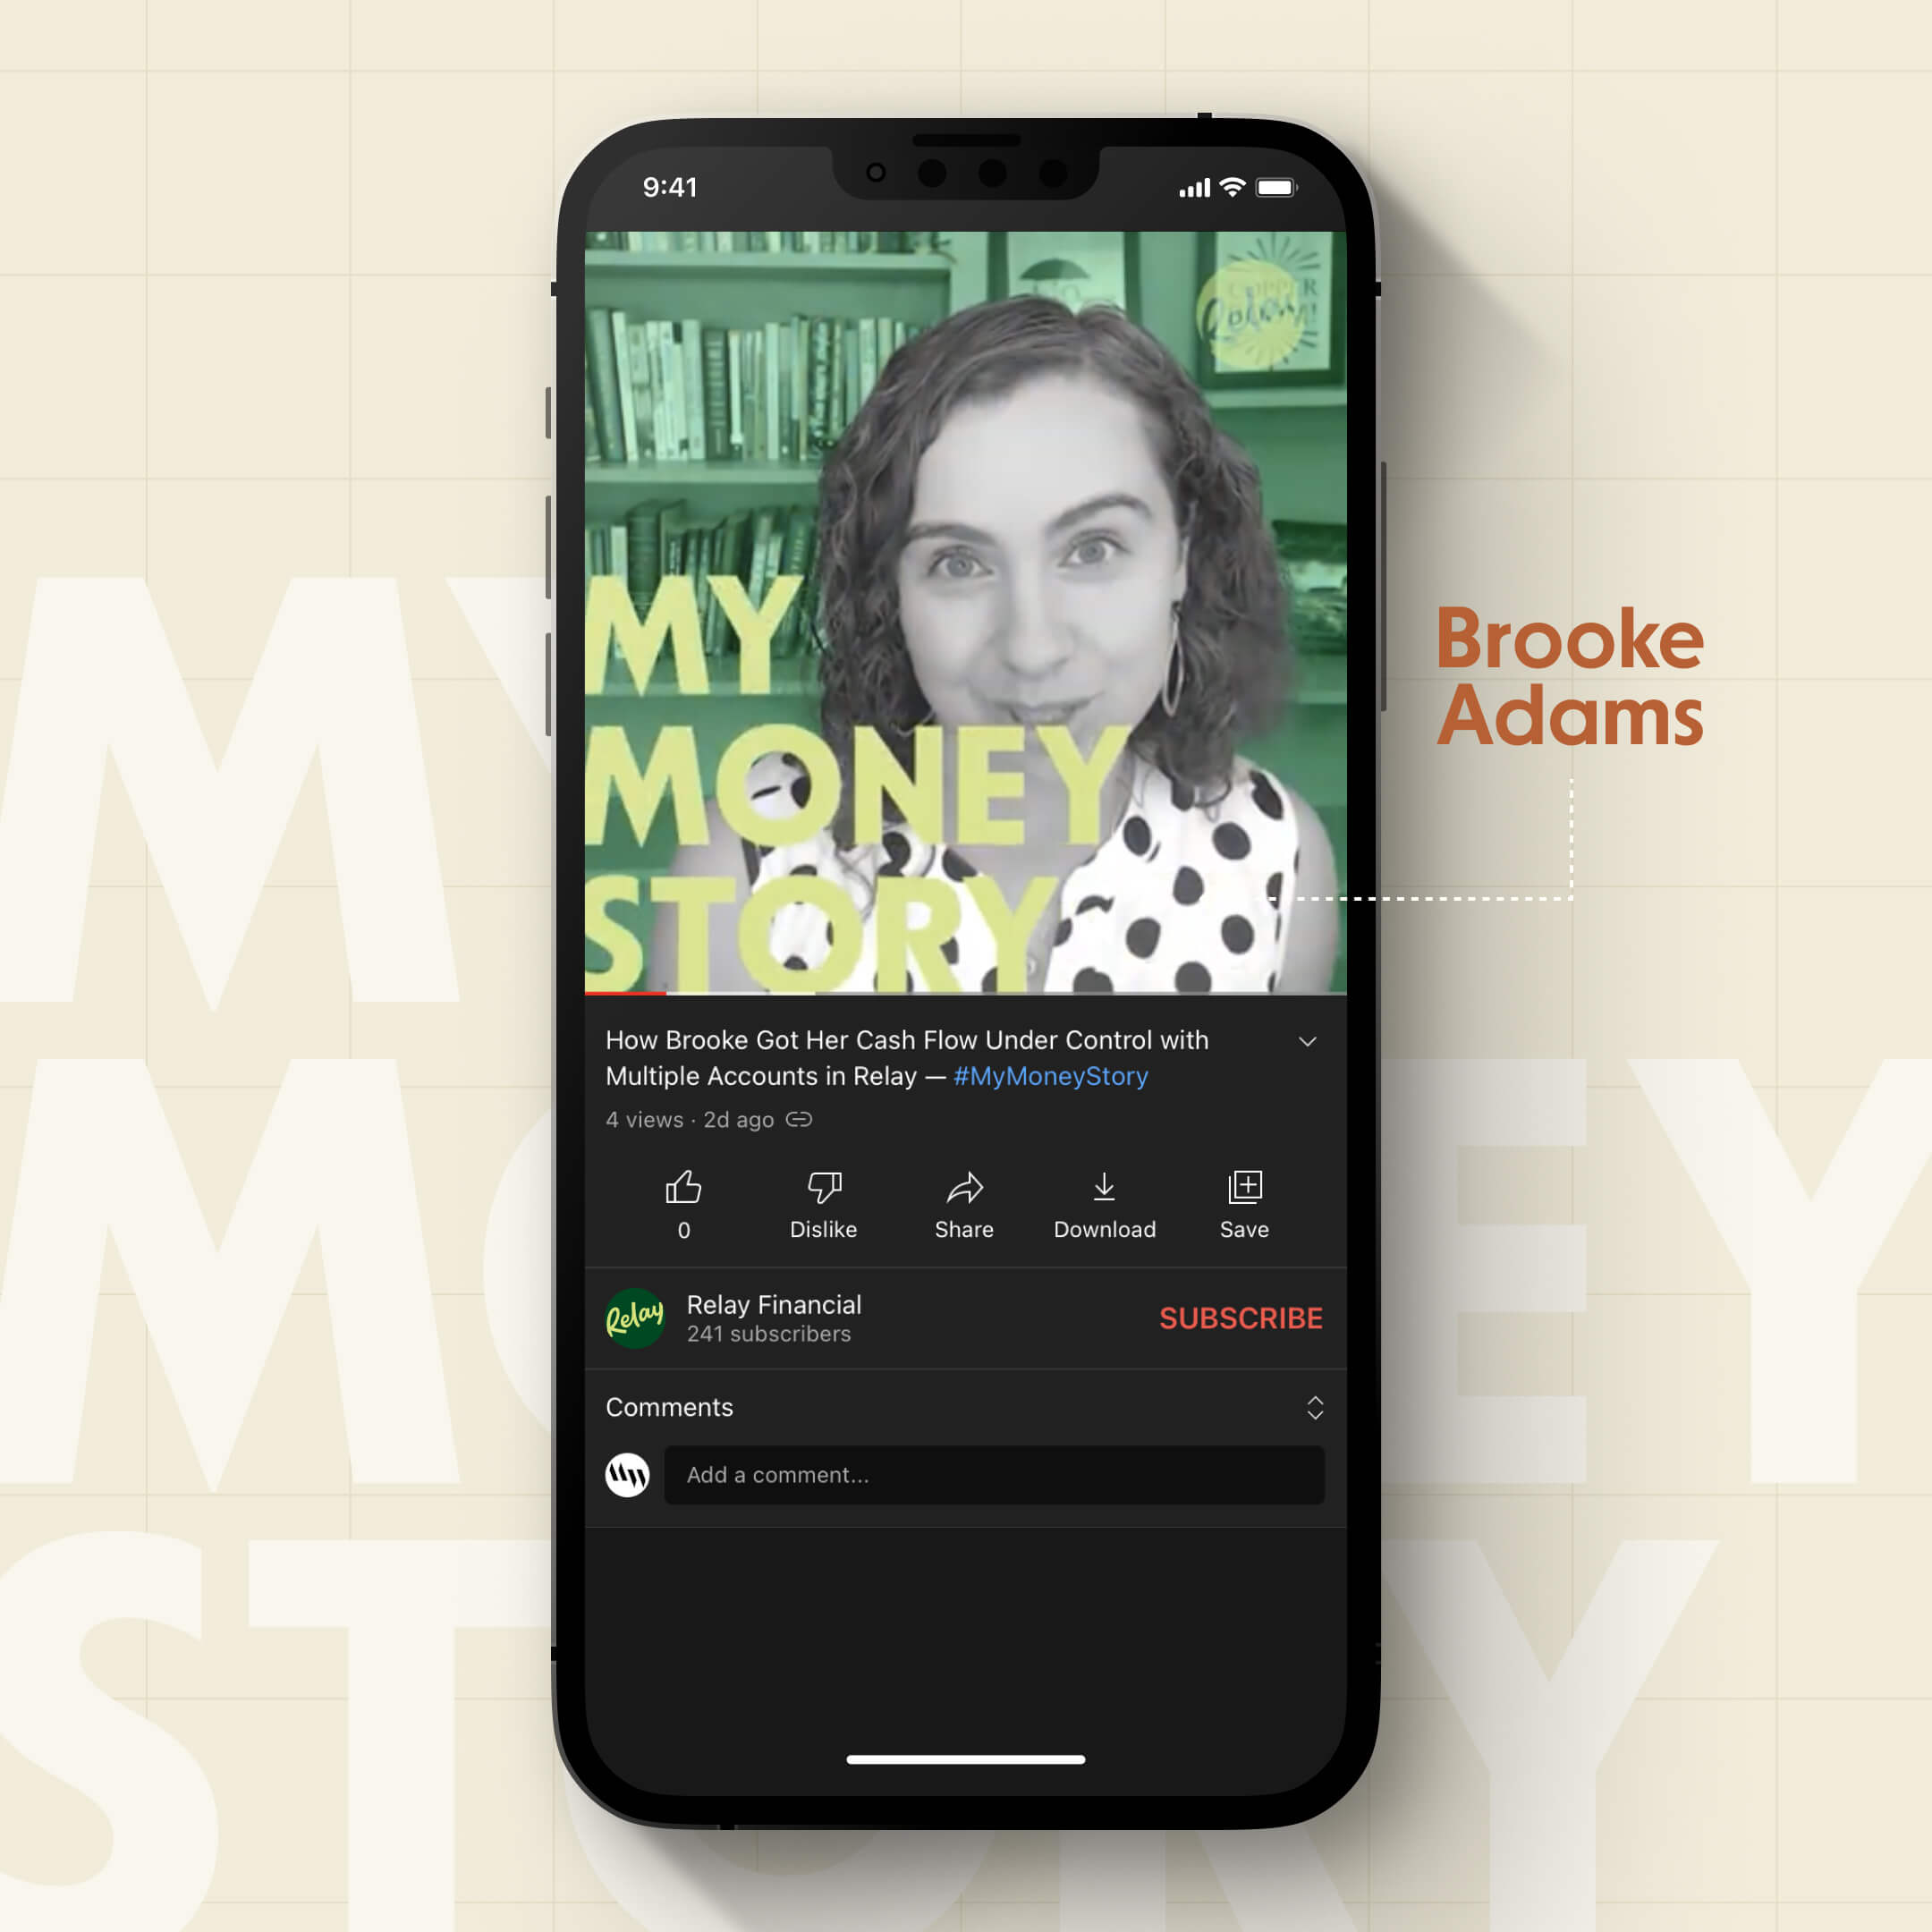 Brooke Adams's My Money Story video